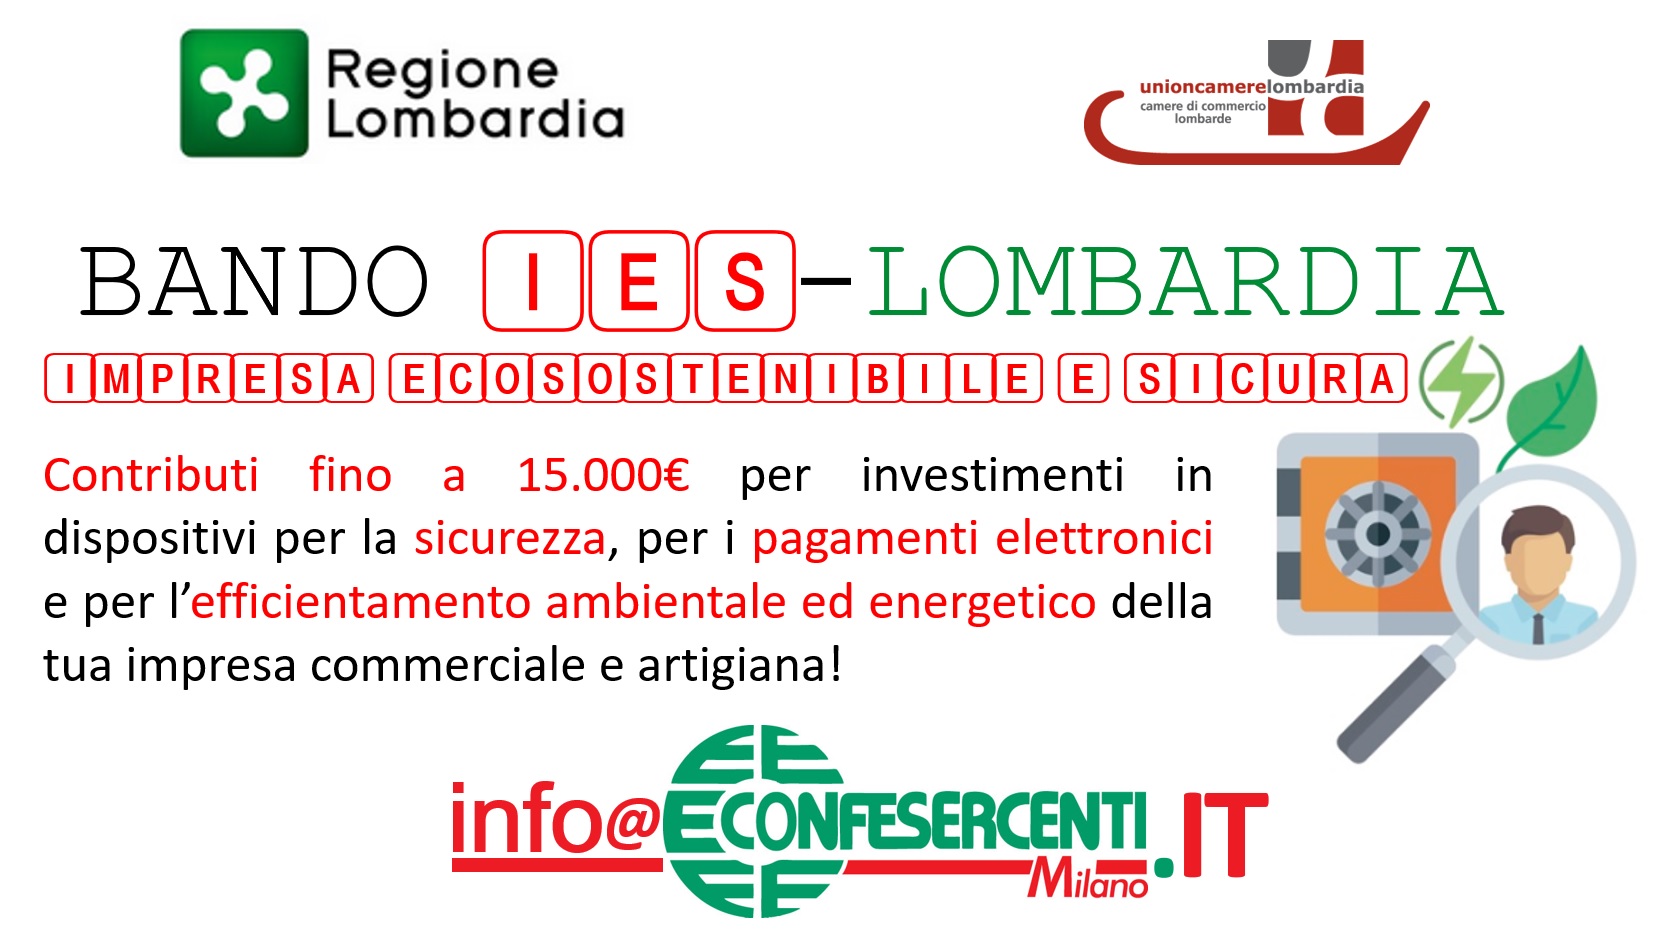 Bando IES Lombardia, domande dal 12.2.2019